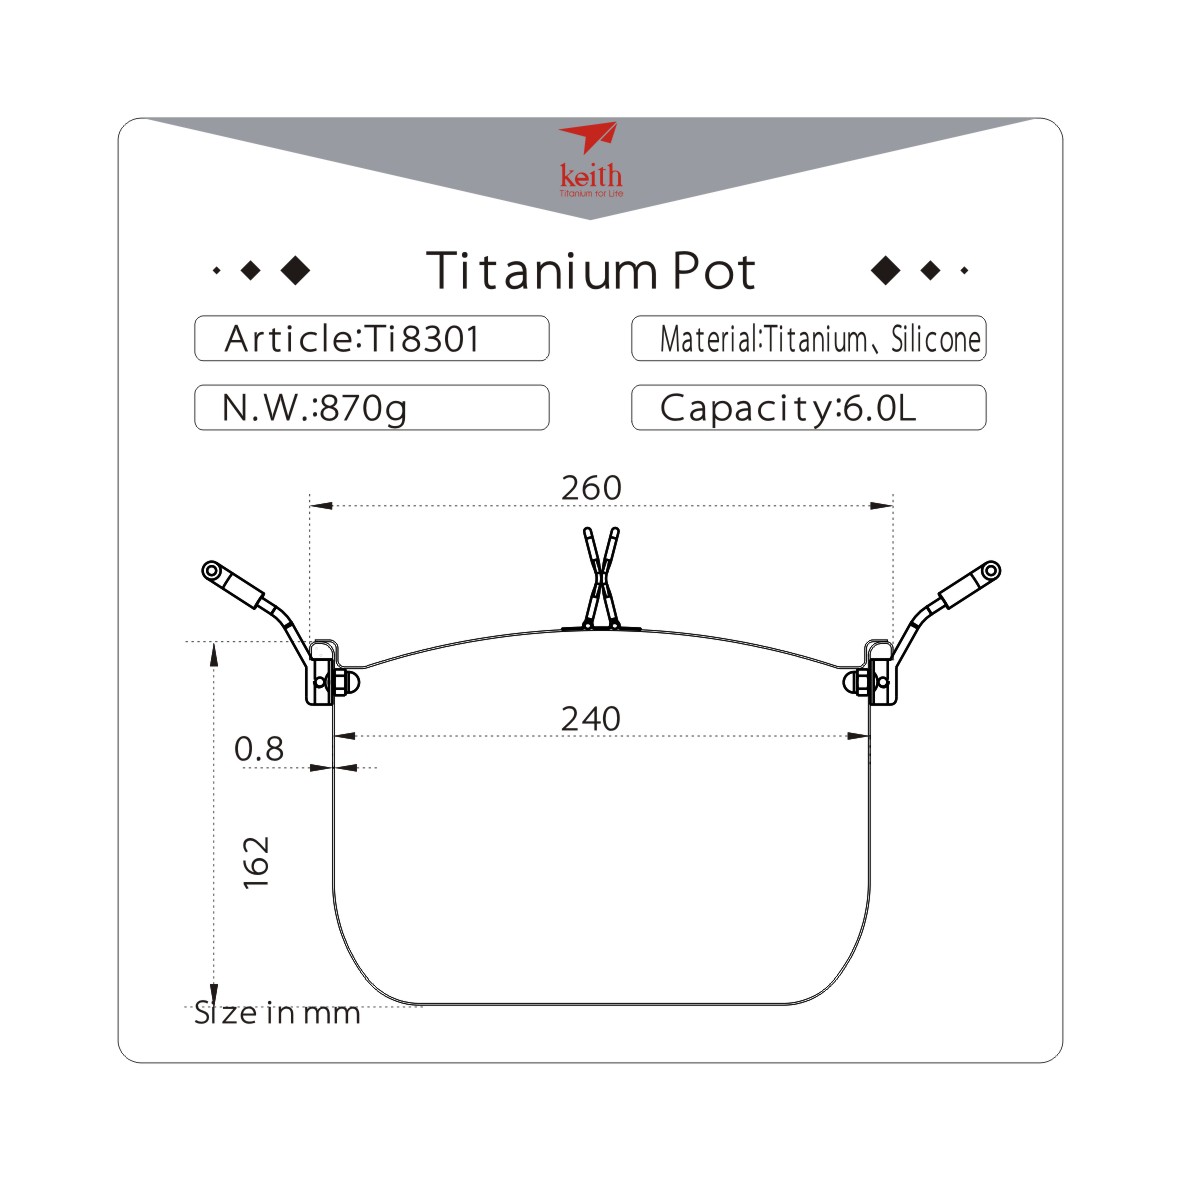 Keith Titanium Ti8301 Pot Shipped from Keith Titanium Warehouse in USA 6.0 L 